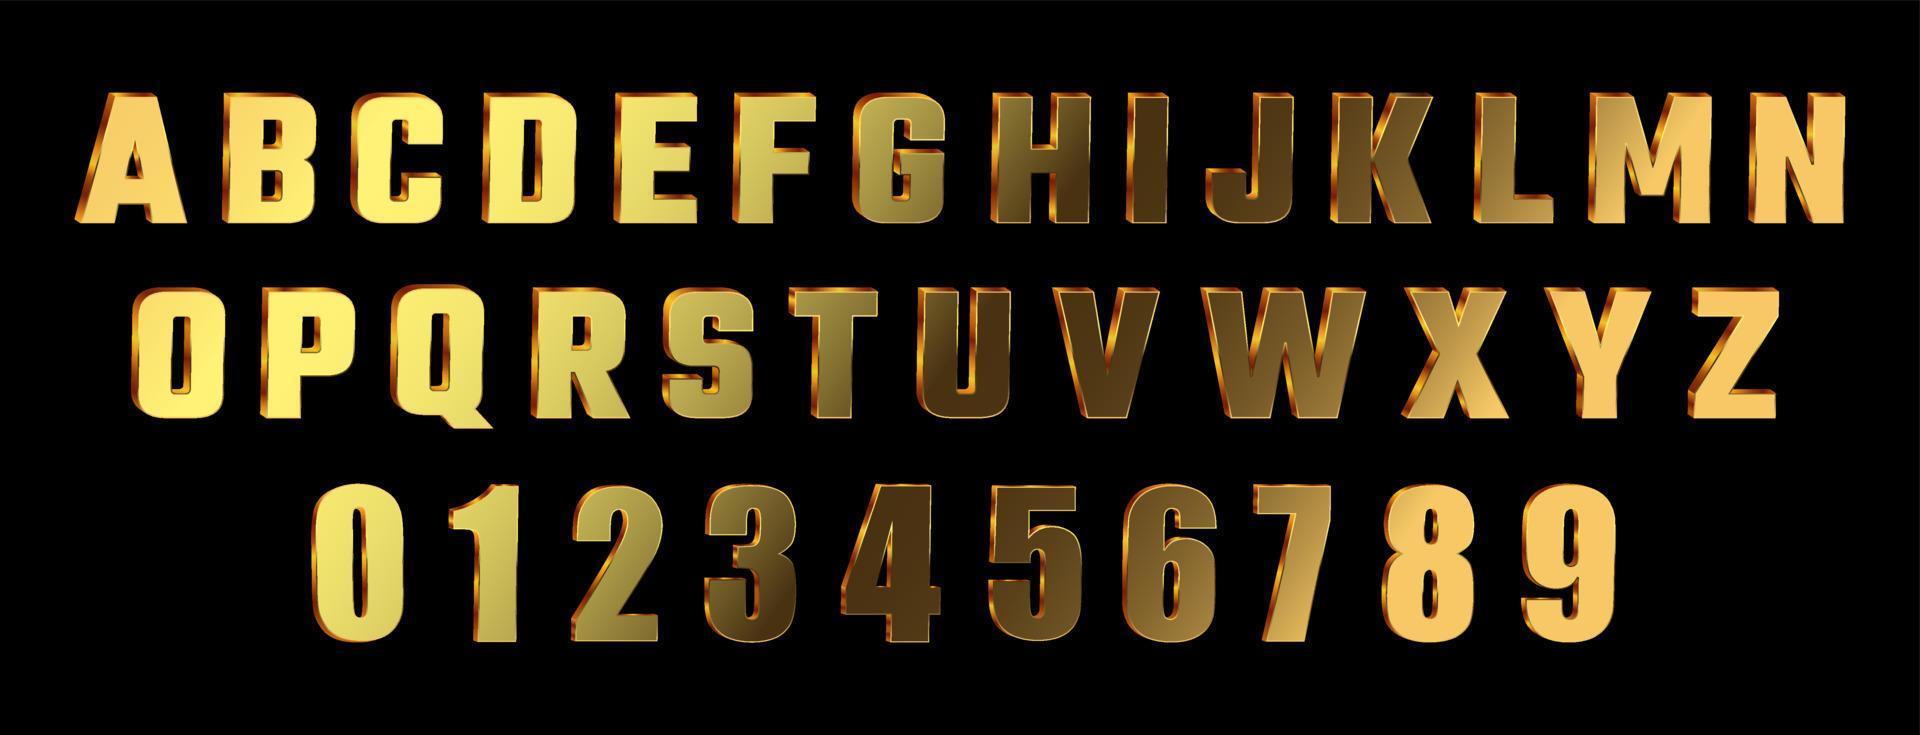 fonte 3d de ouro. letras e números do alfabeto de metal realistas. vetor